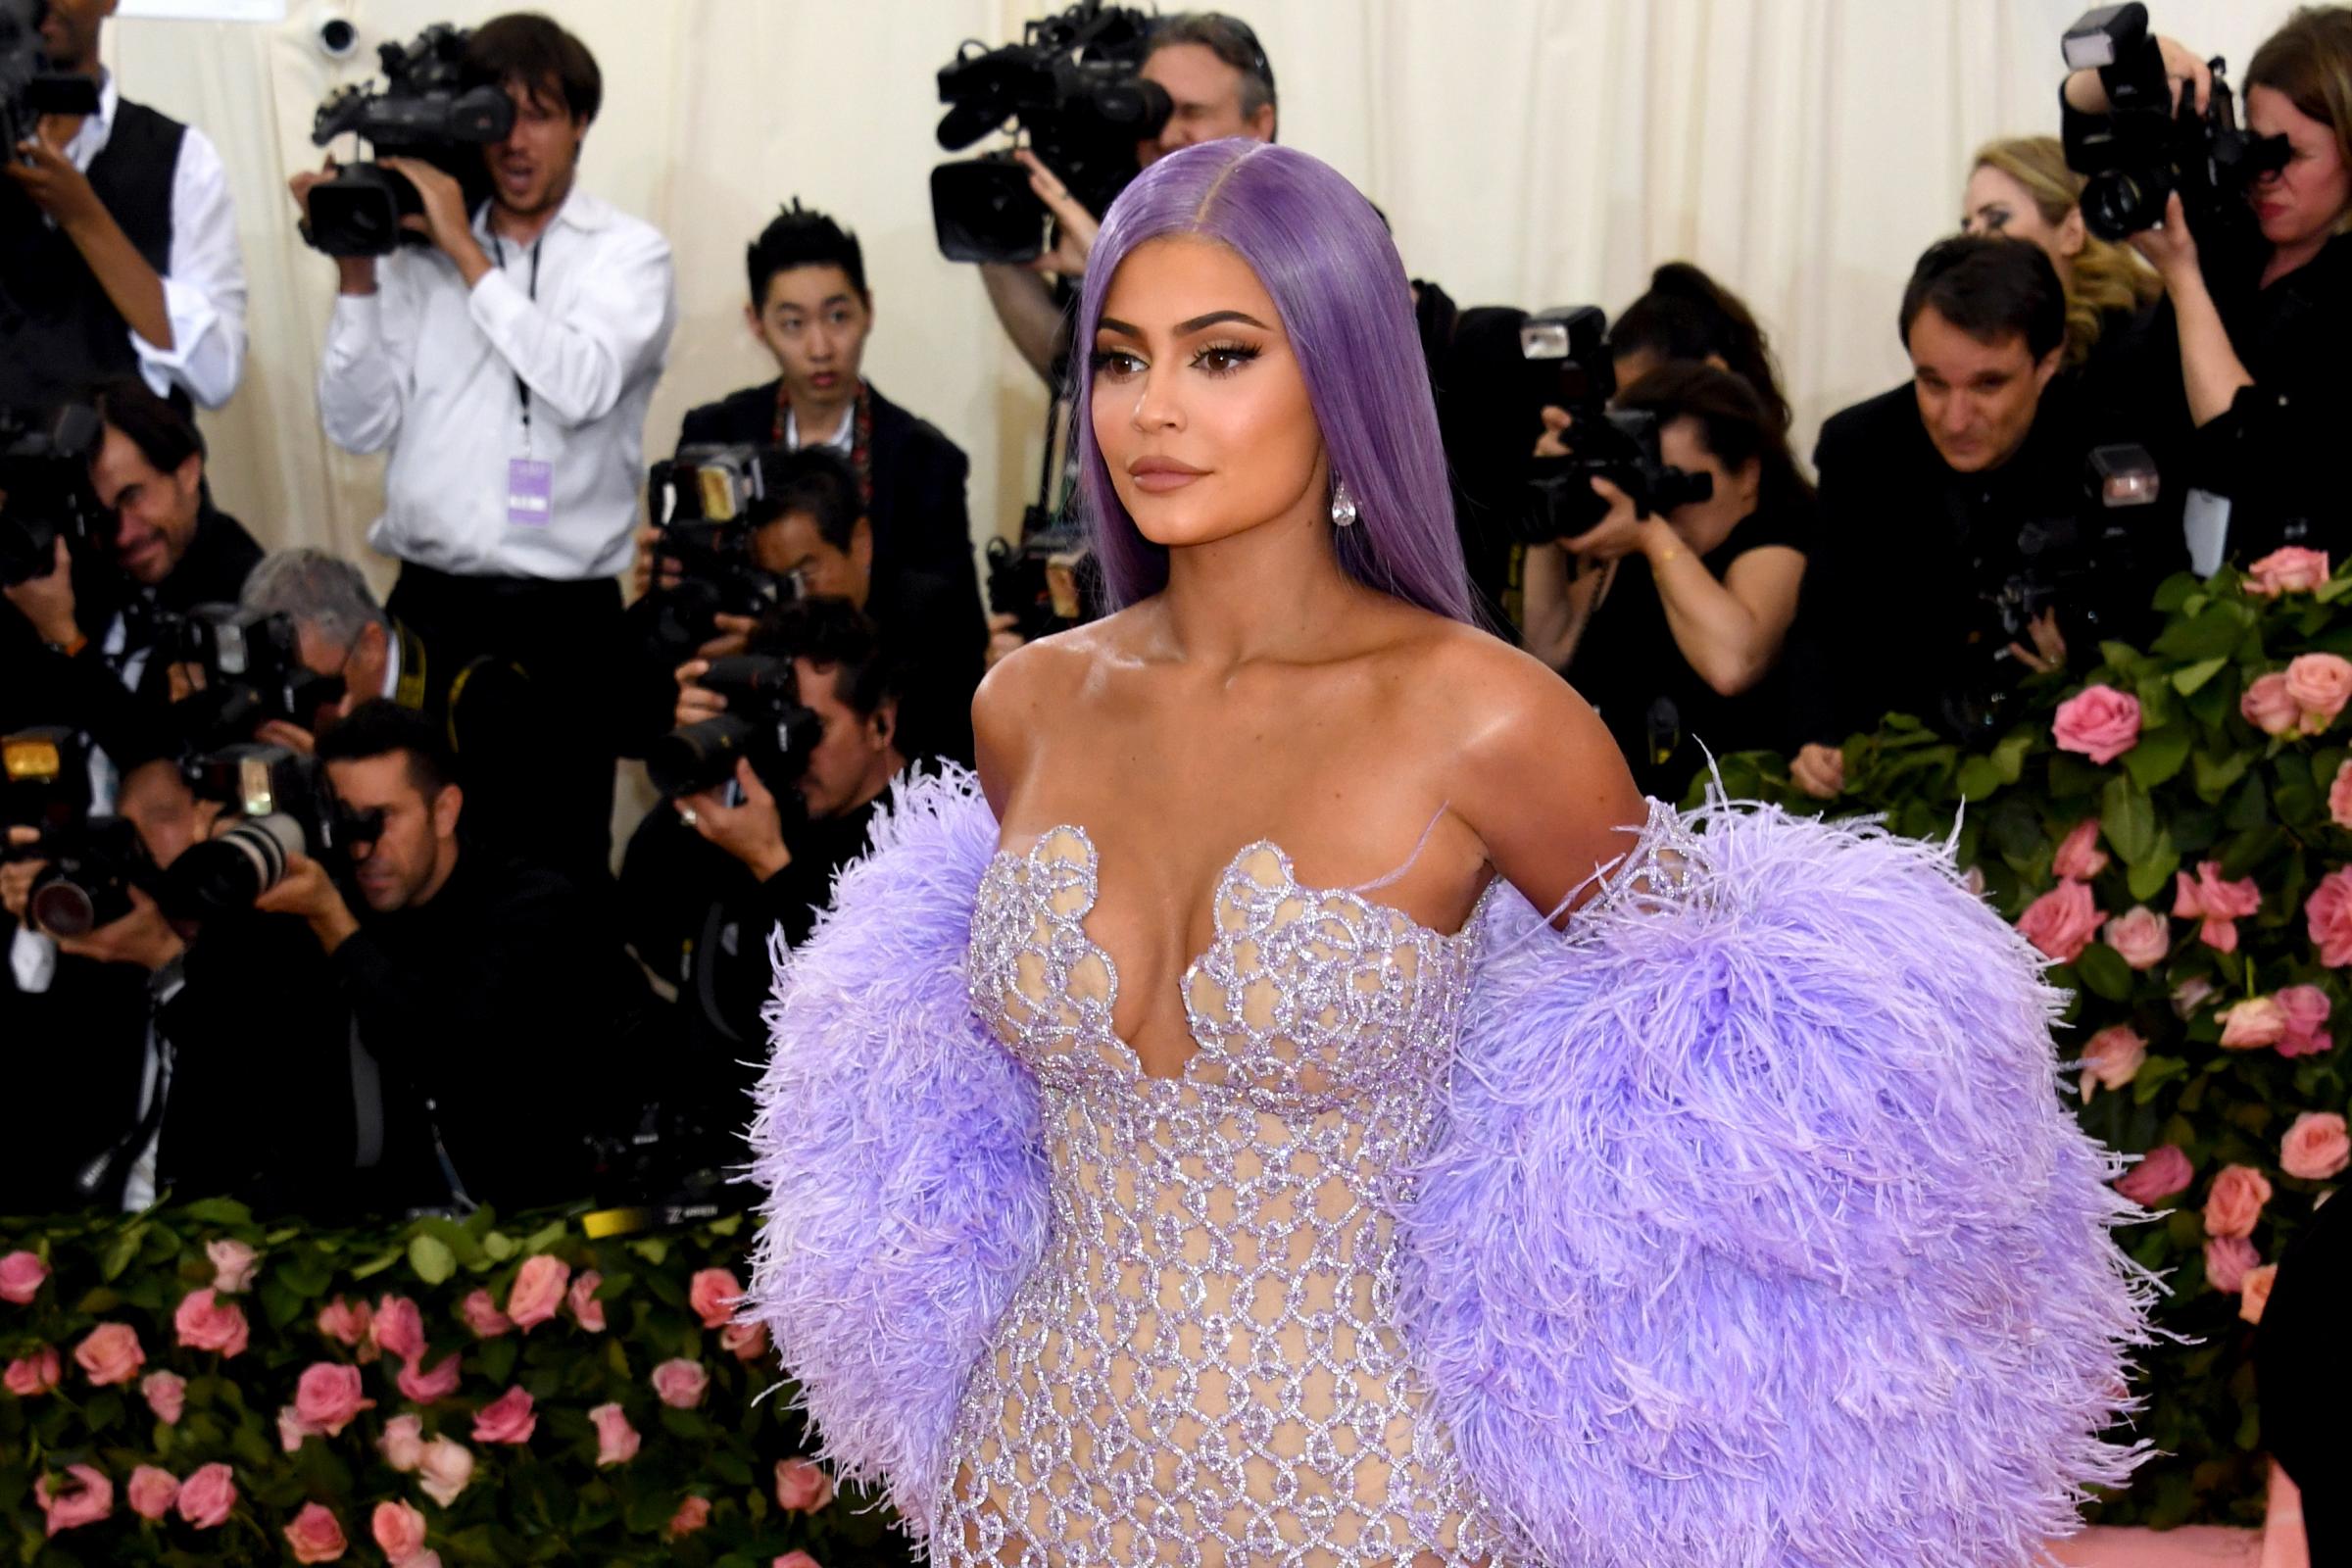 Kylie Jenner denies bragging about wealth at Met Gala